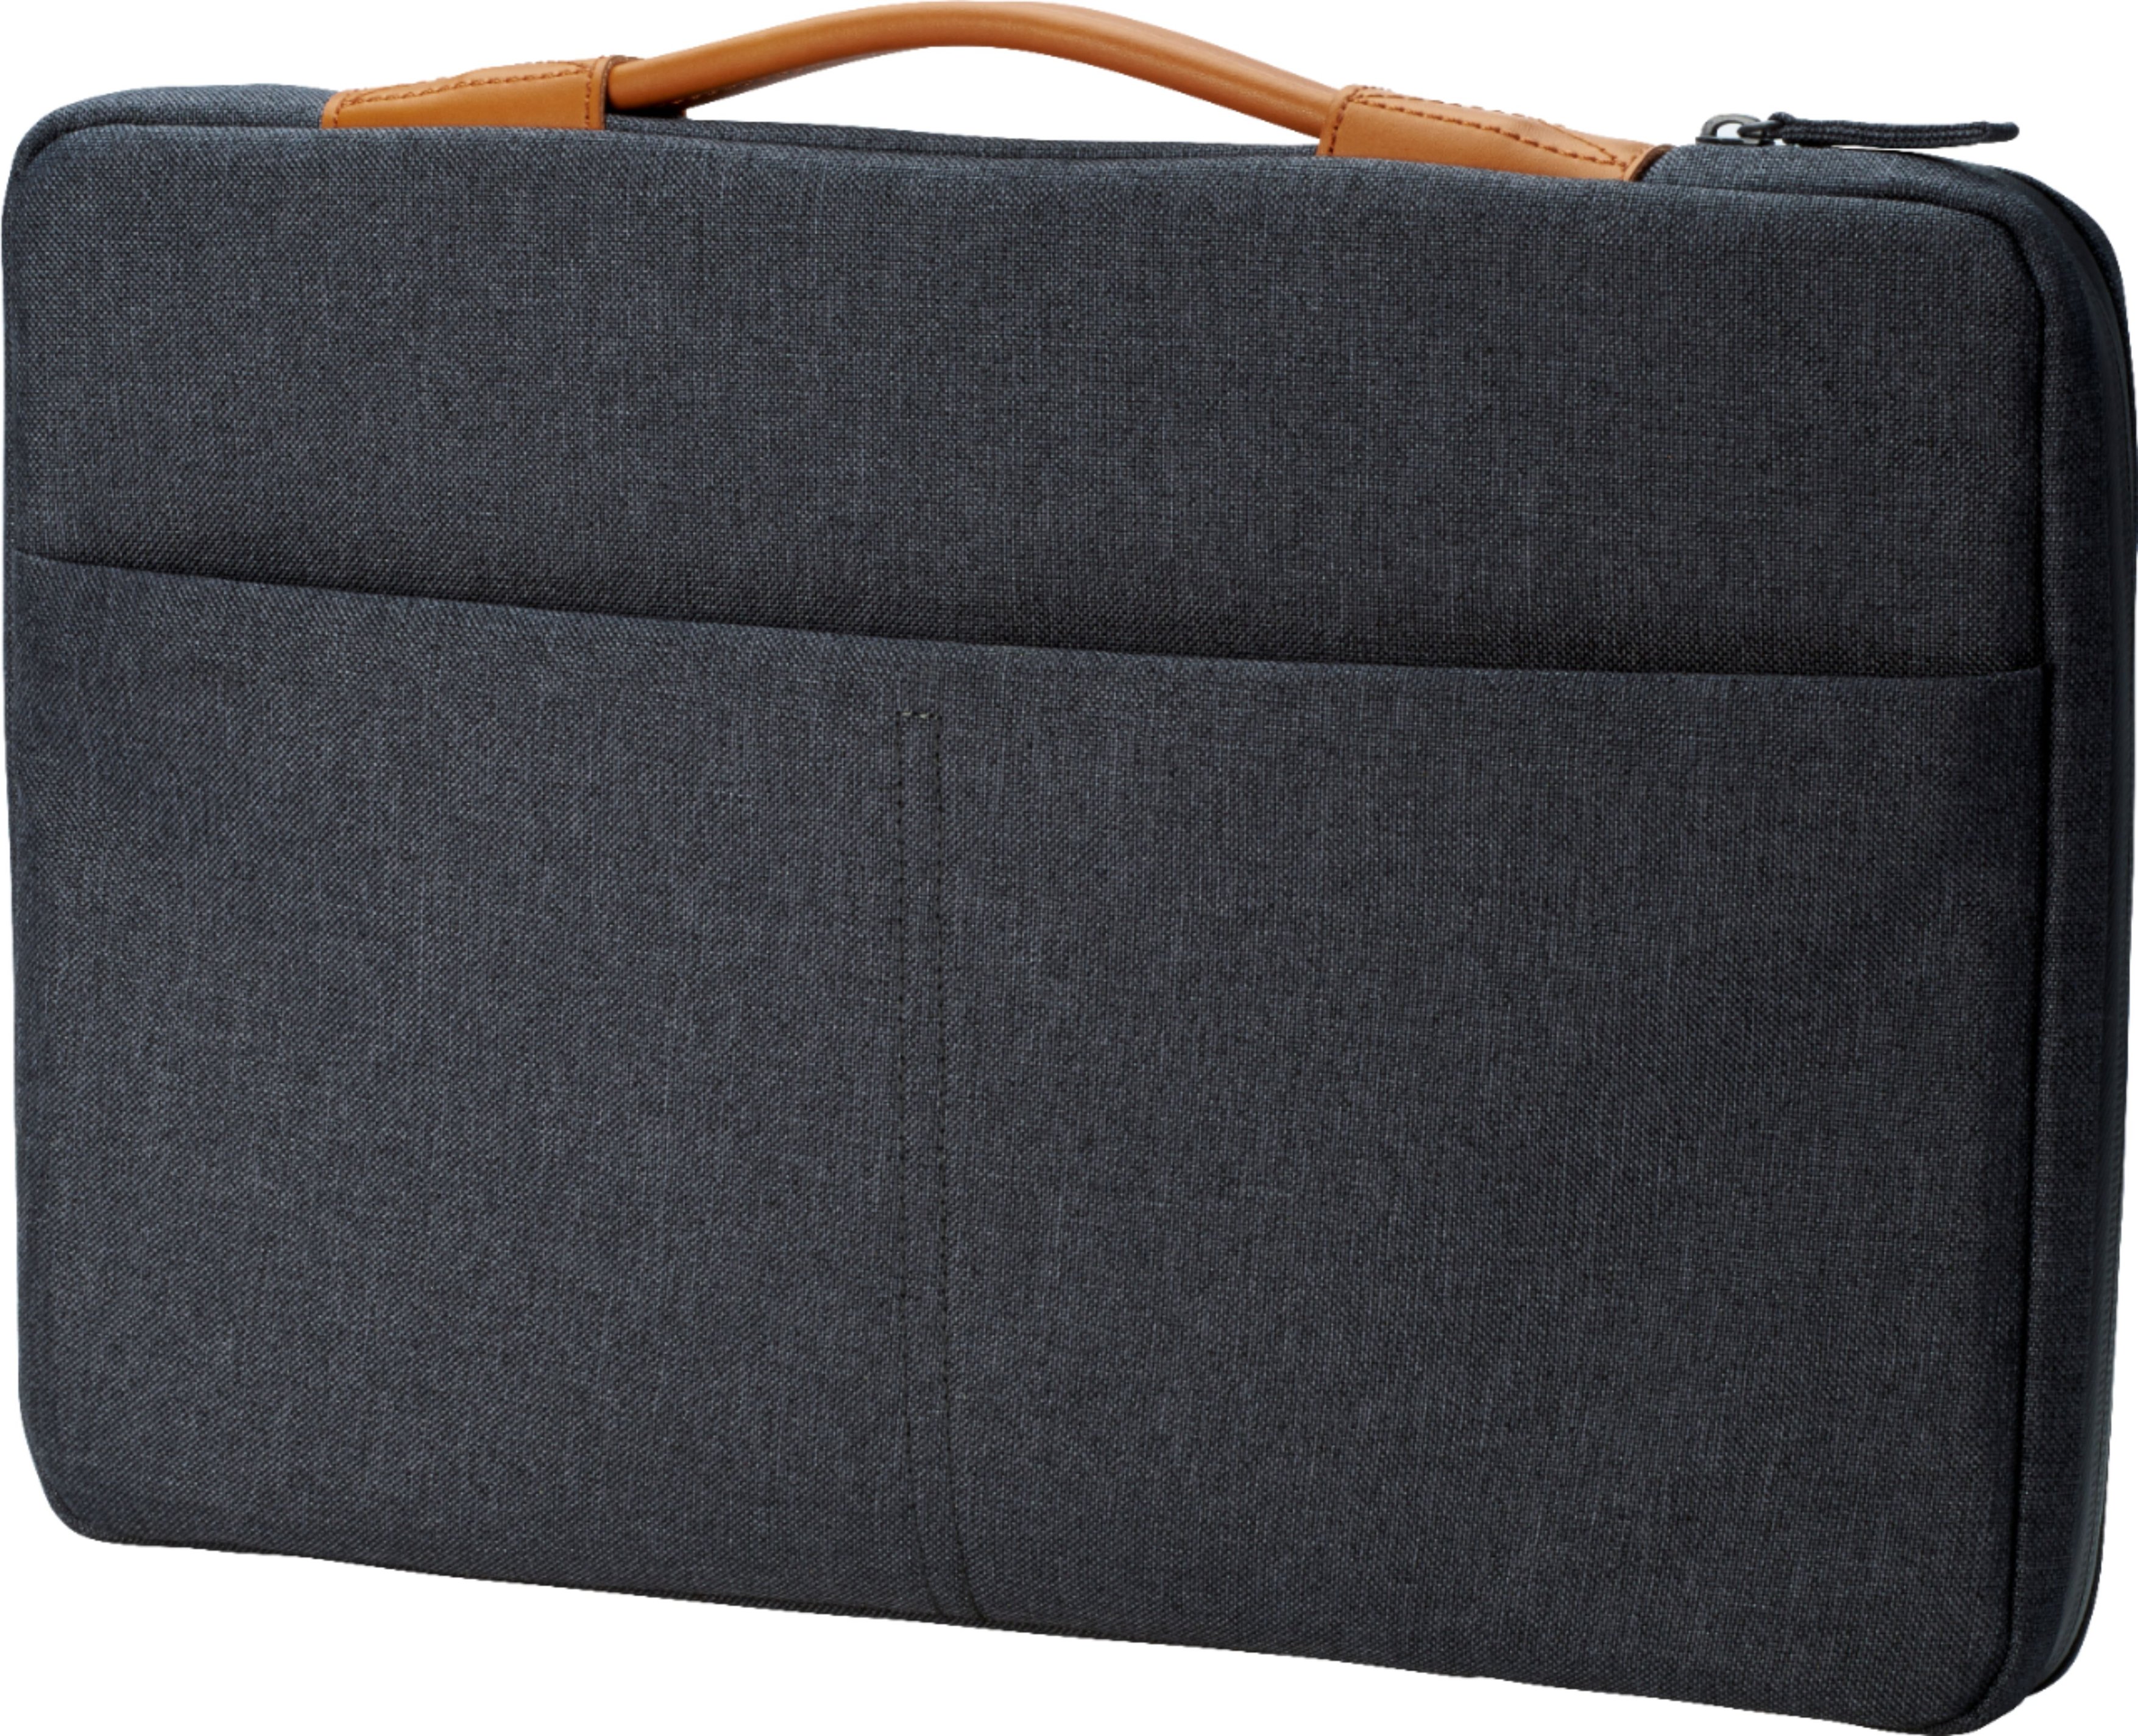 Joseph Banks noot Onverschilligheid Best Buy: HP Laptop Sleeve for 15.6" Laptop Charcoal gray 2UF58AA#ABL